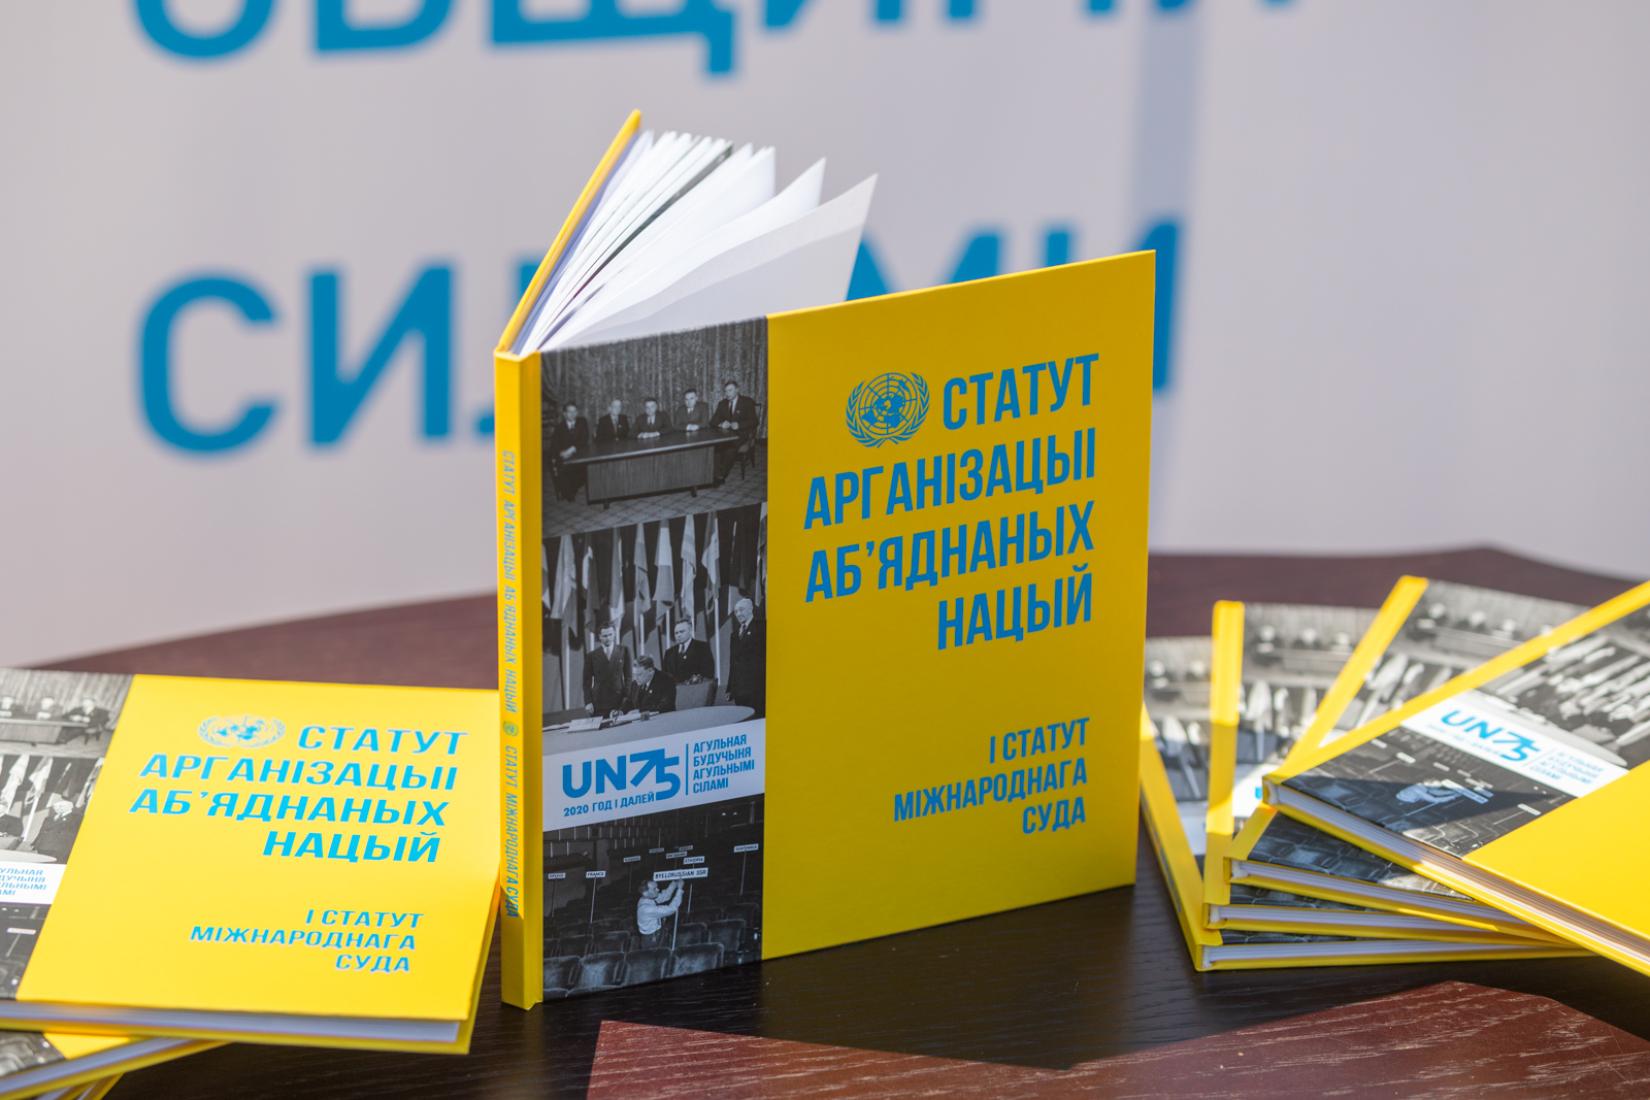 UN Charter in Belarusian language